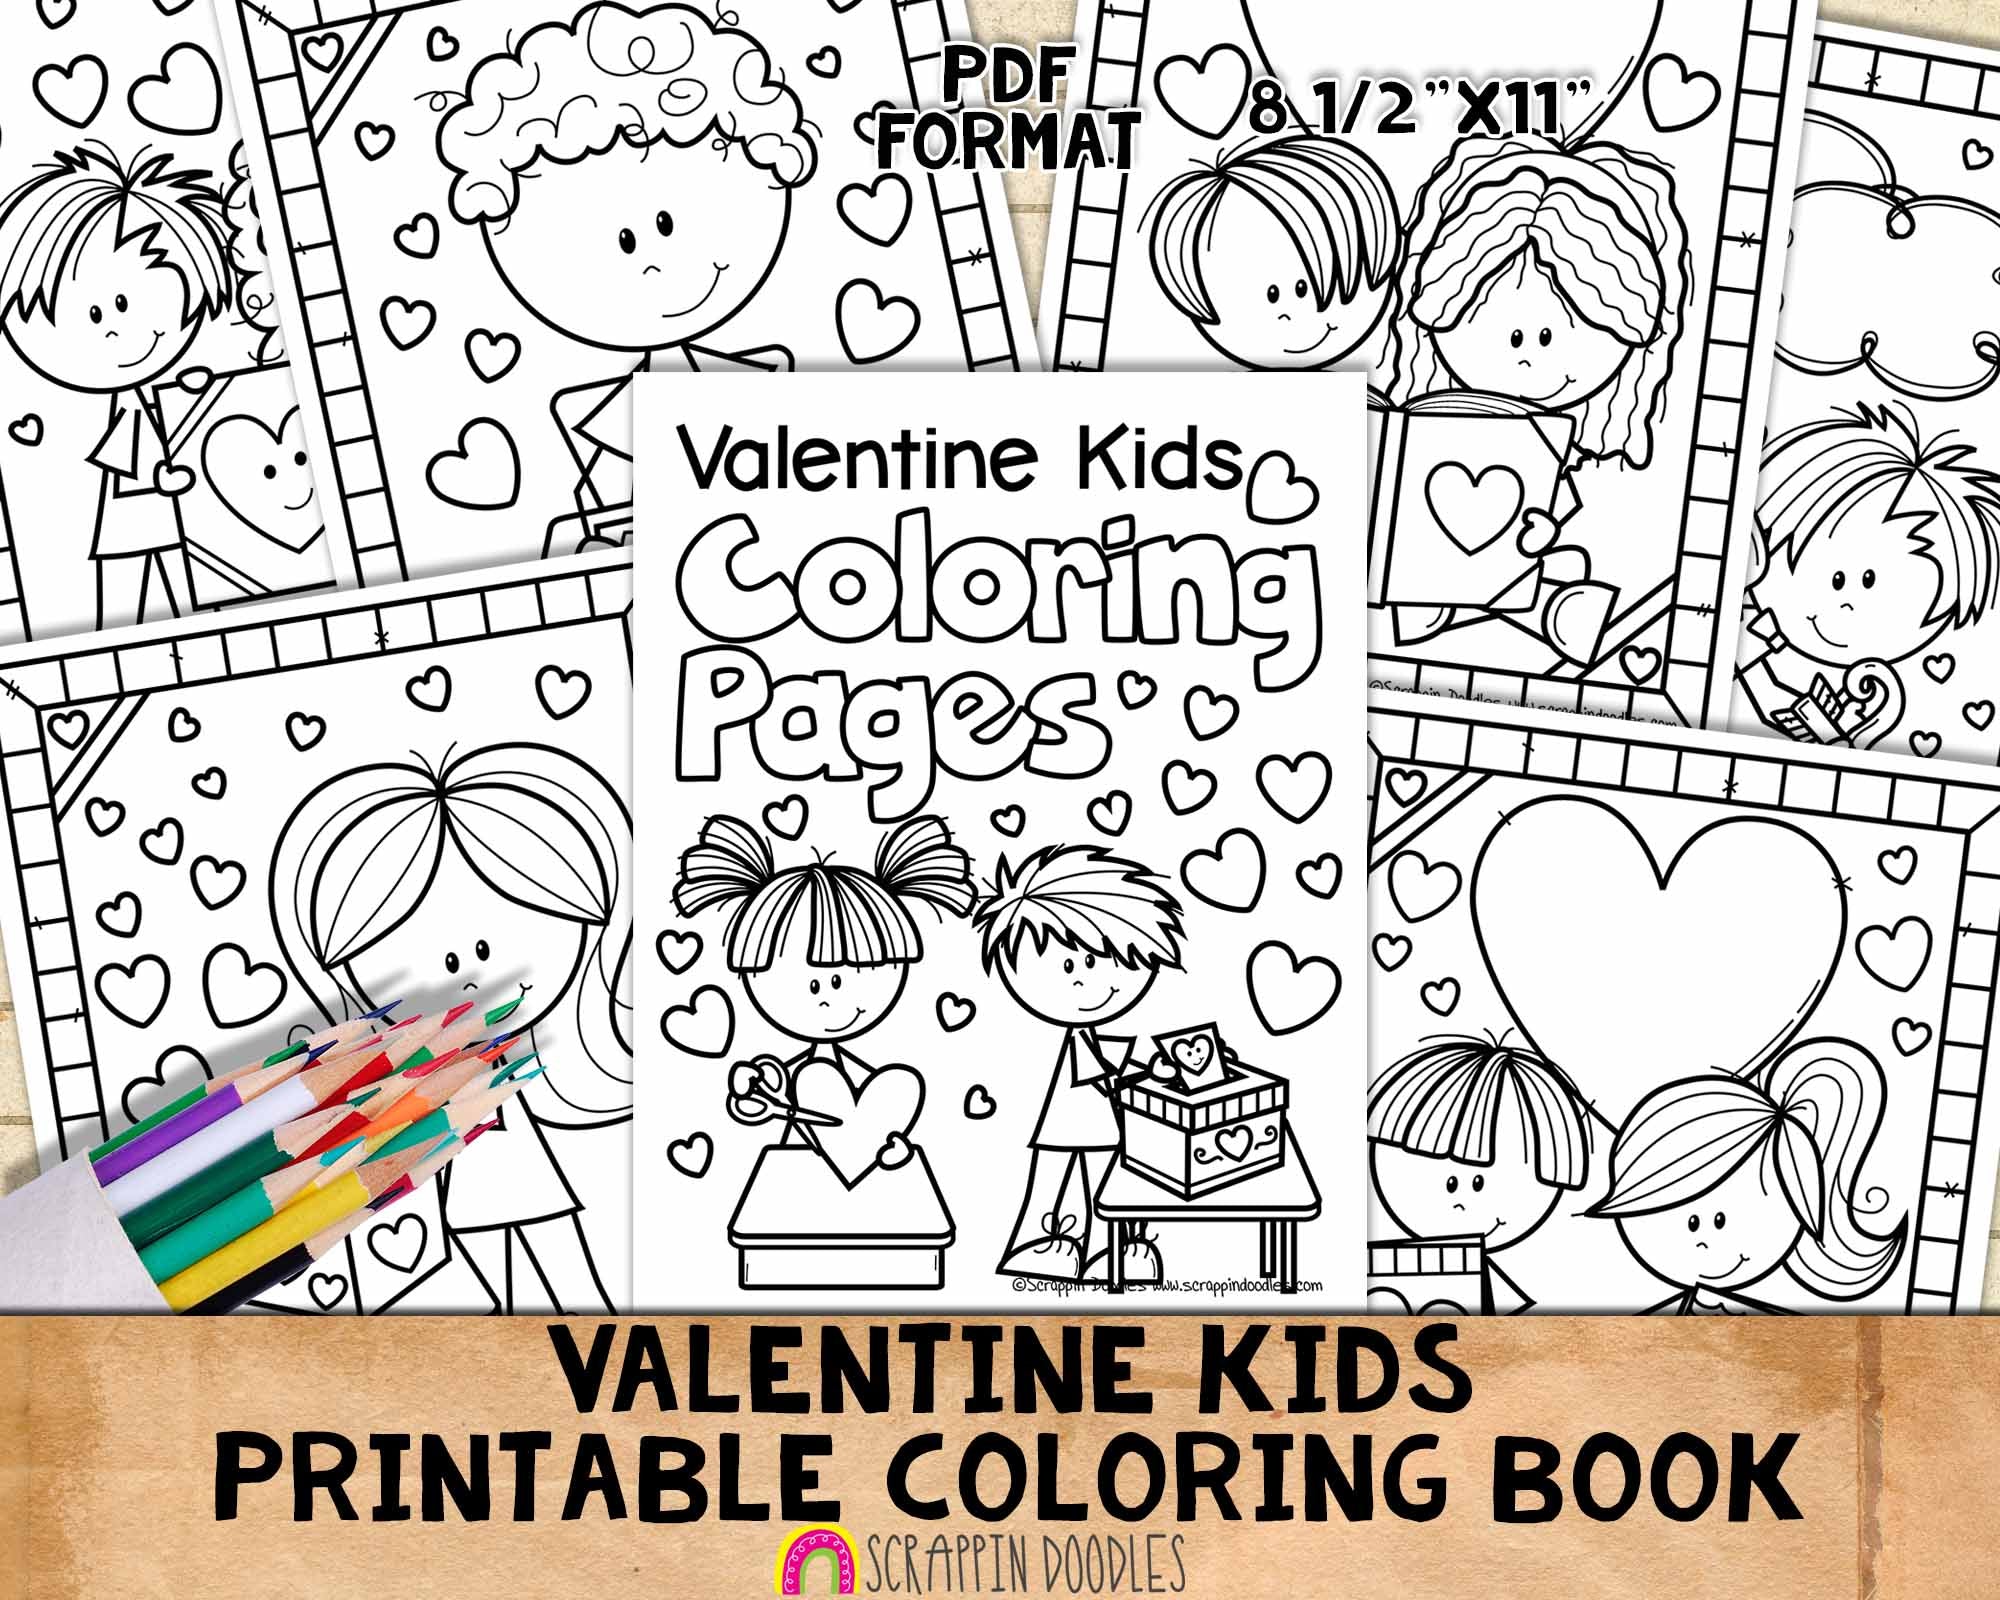 Valentine kids coloring book